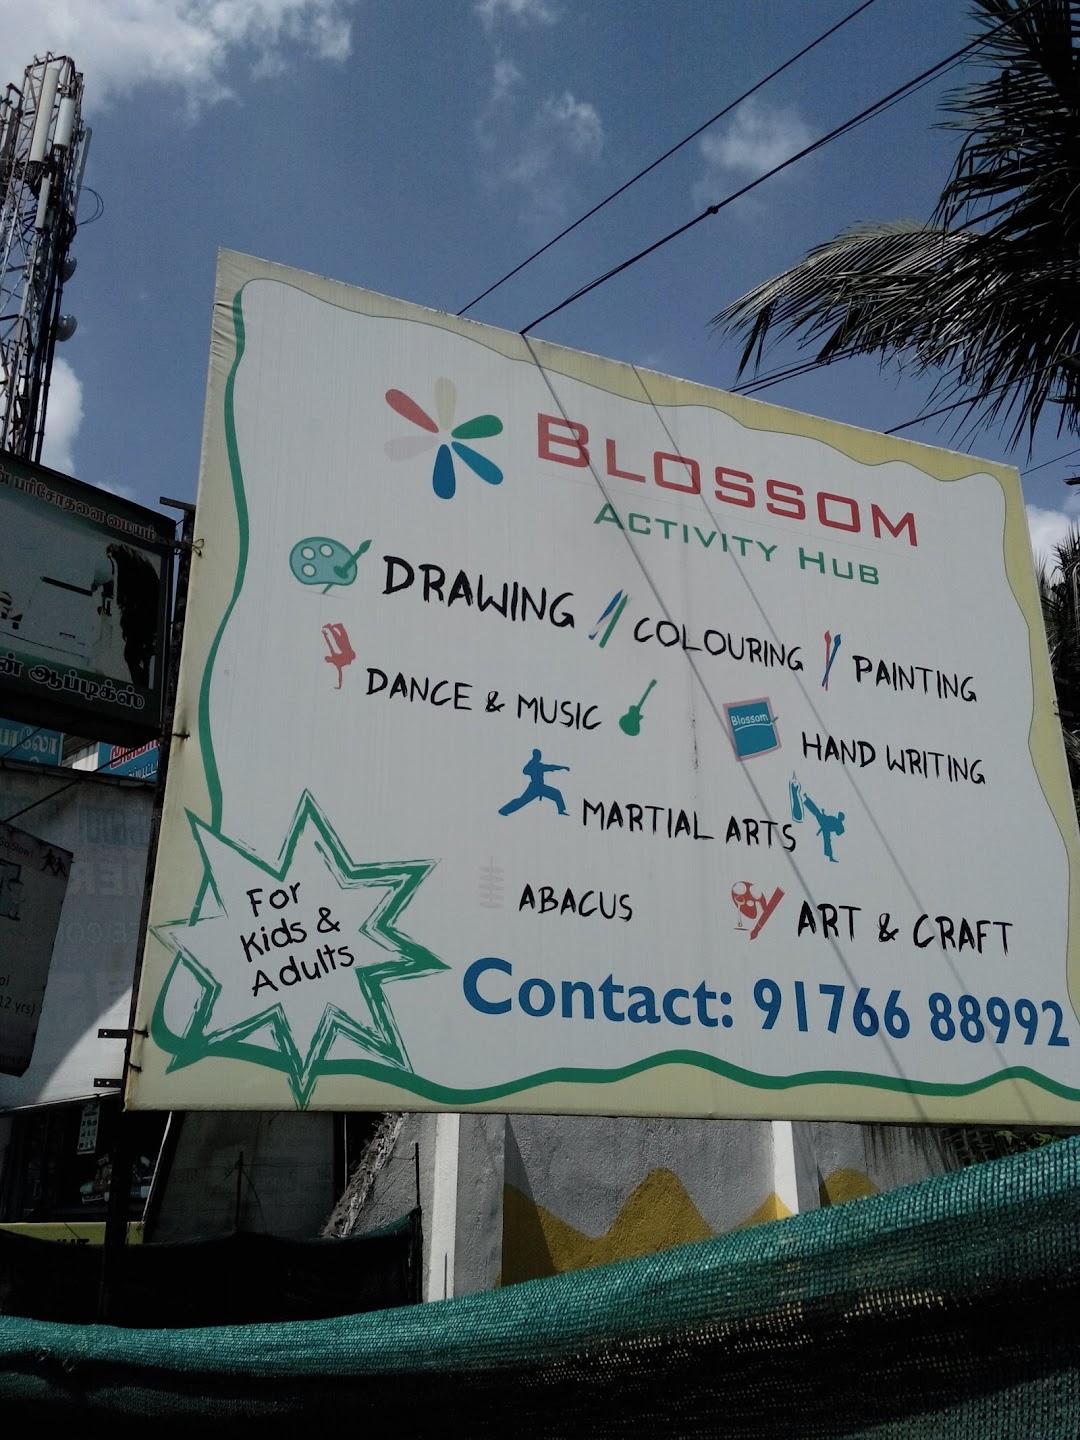 Blossom Activity Hub